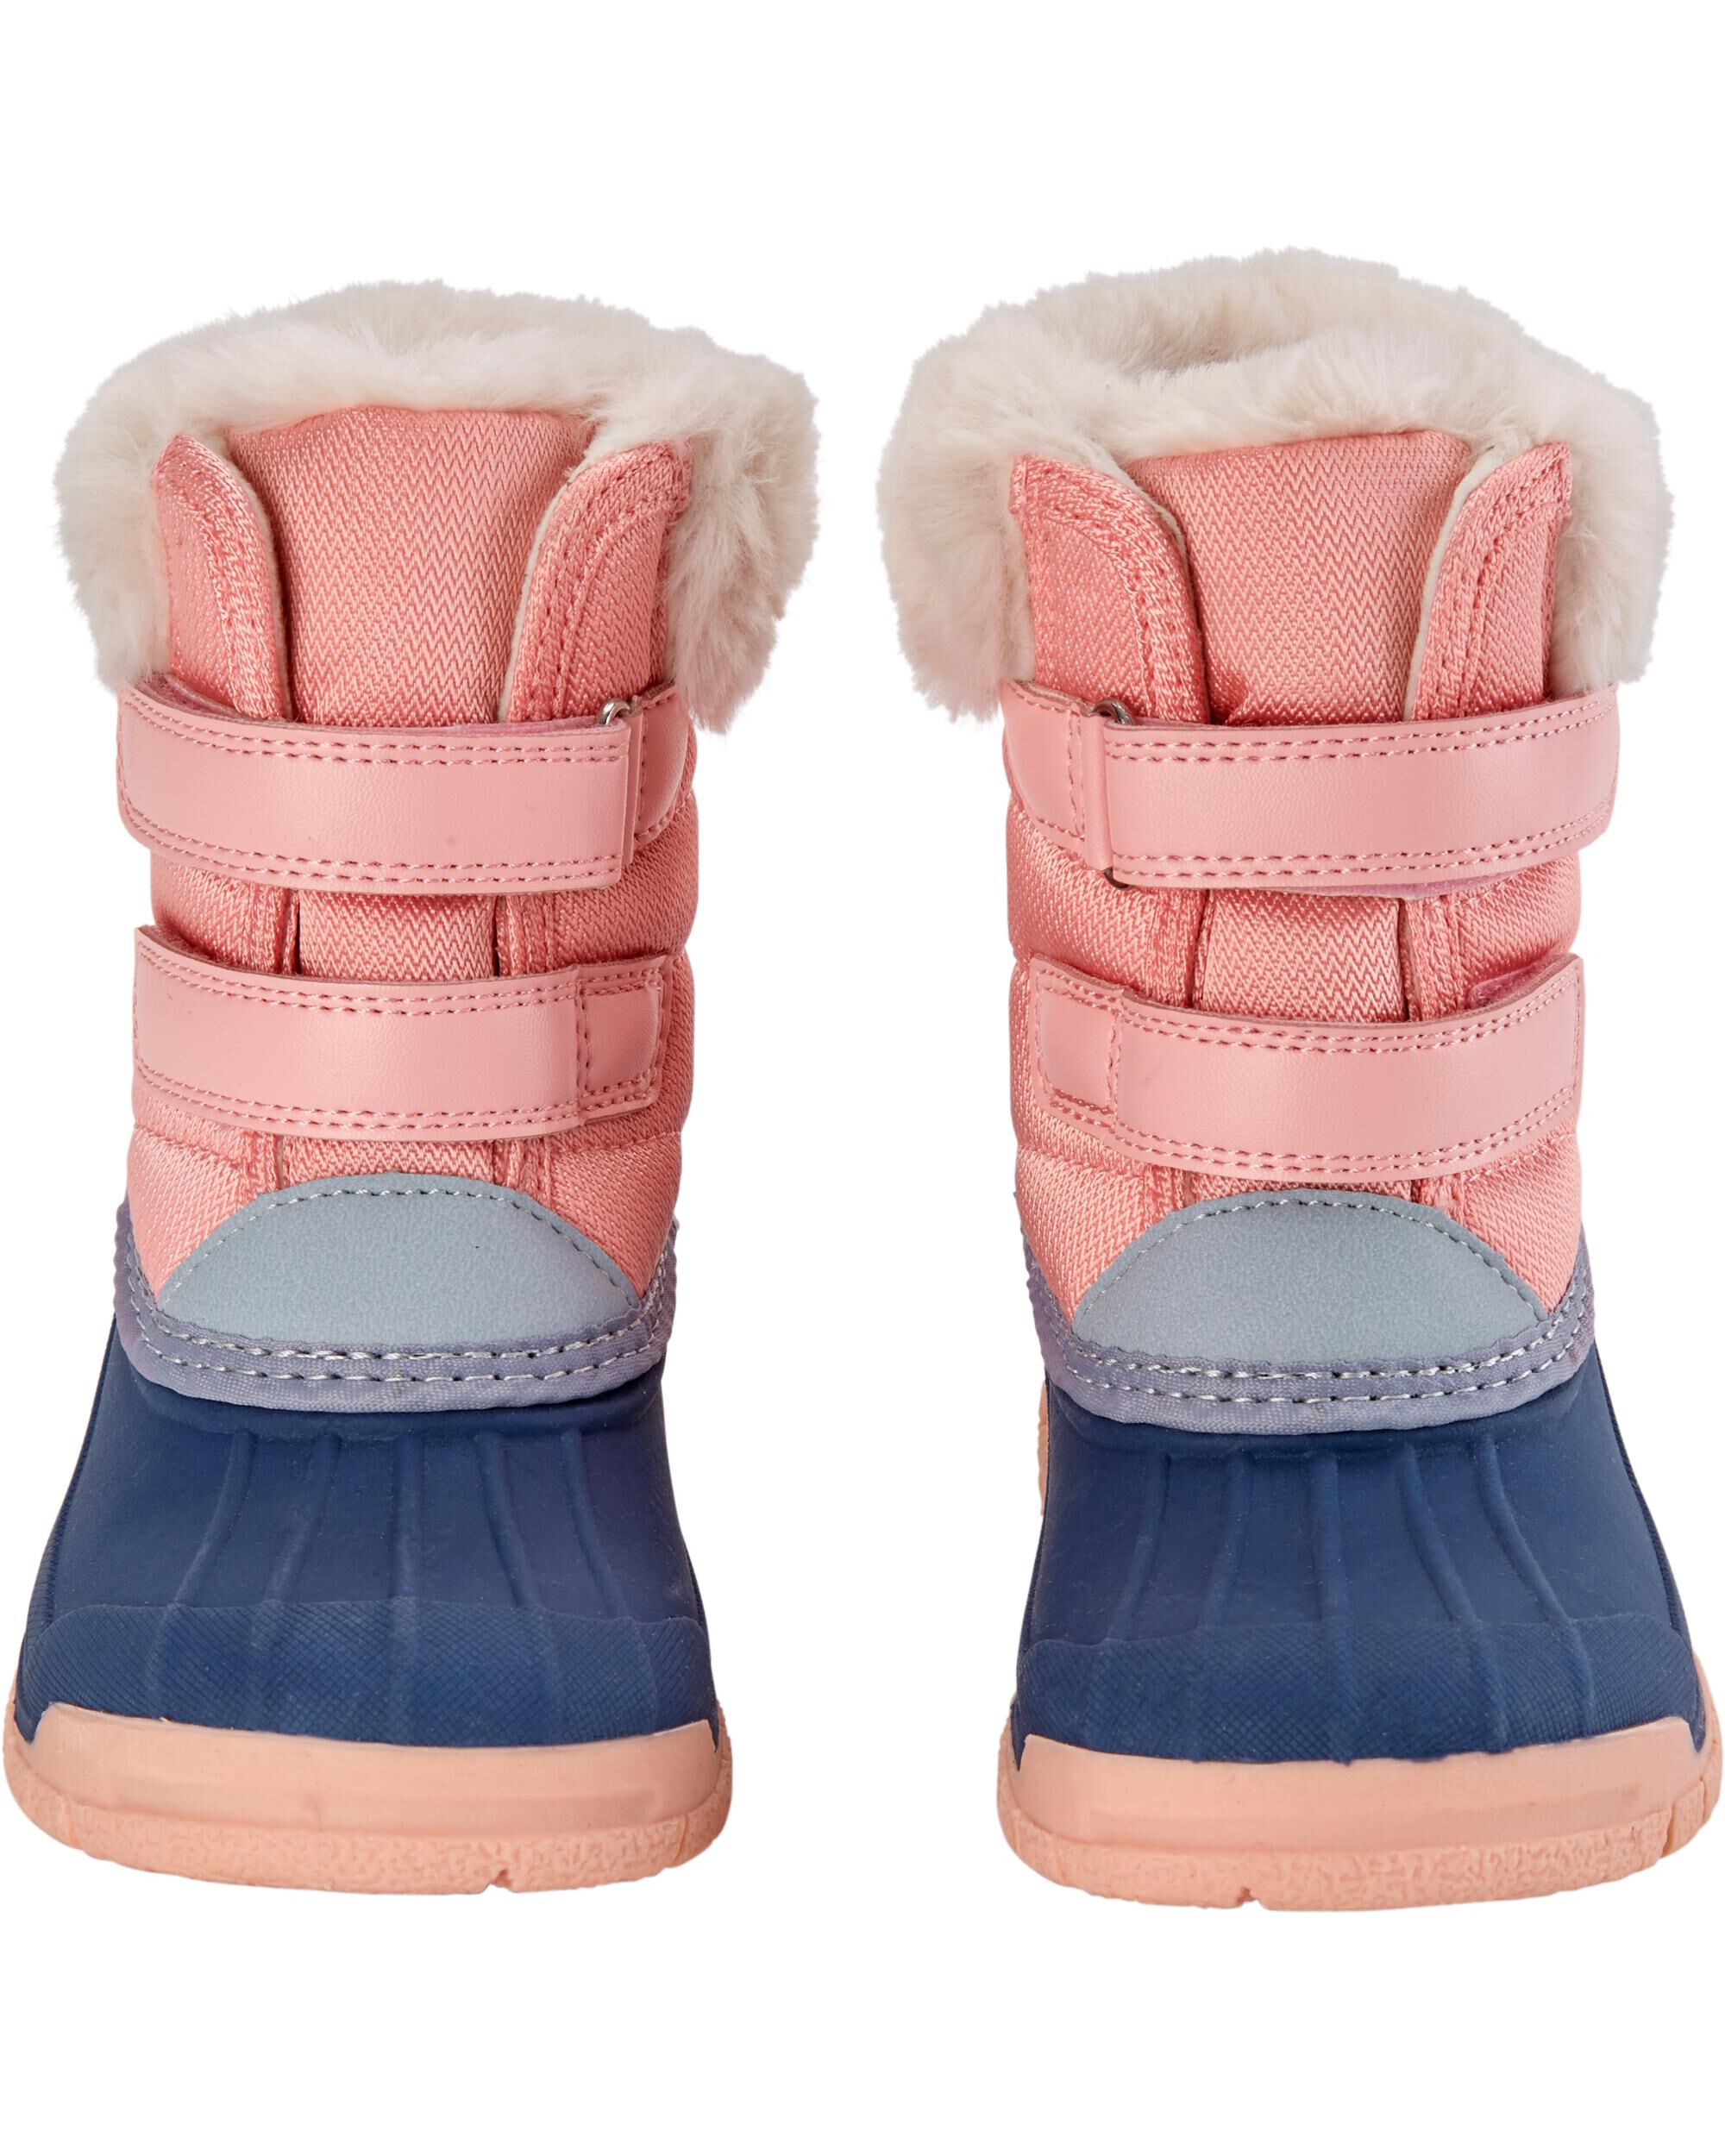 oshkosh snow boots